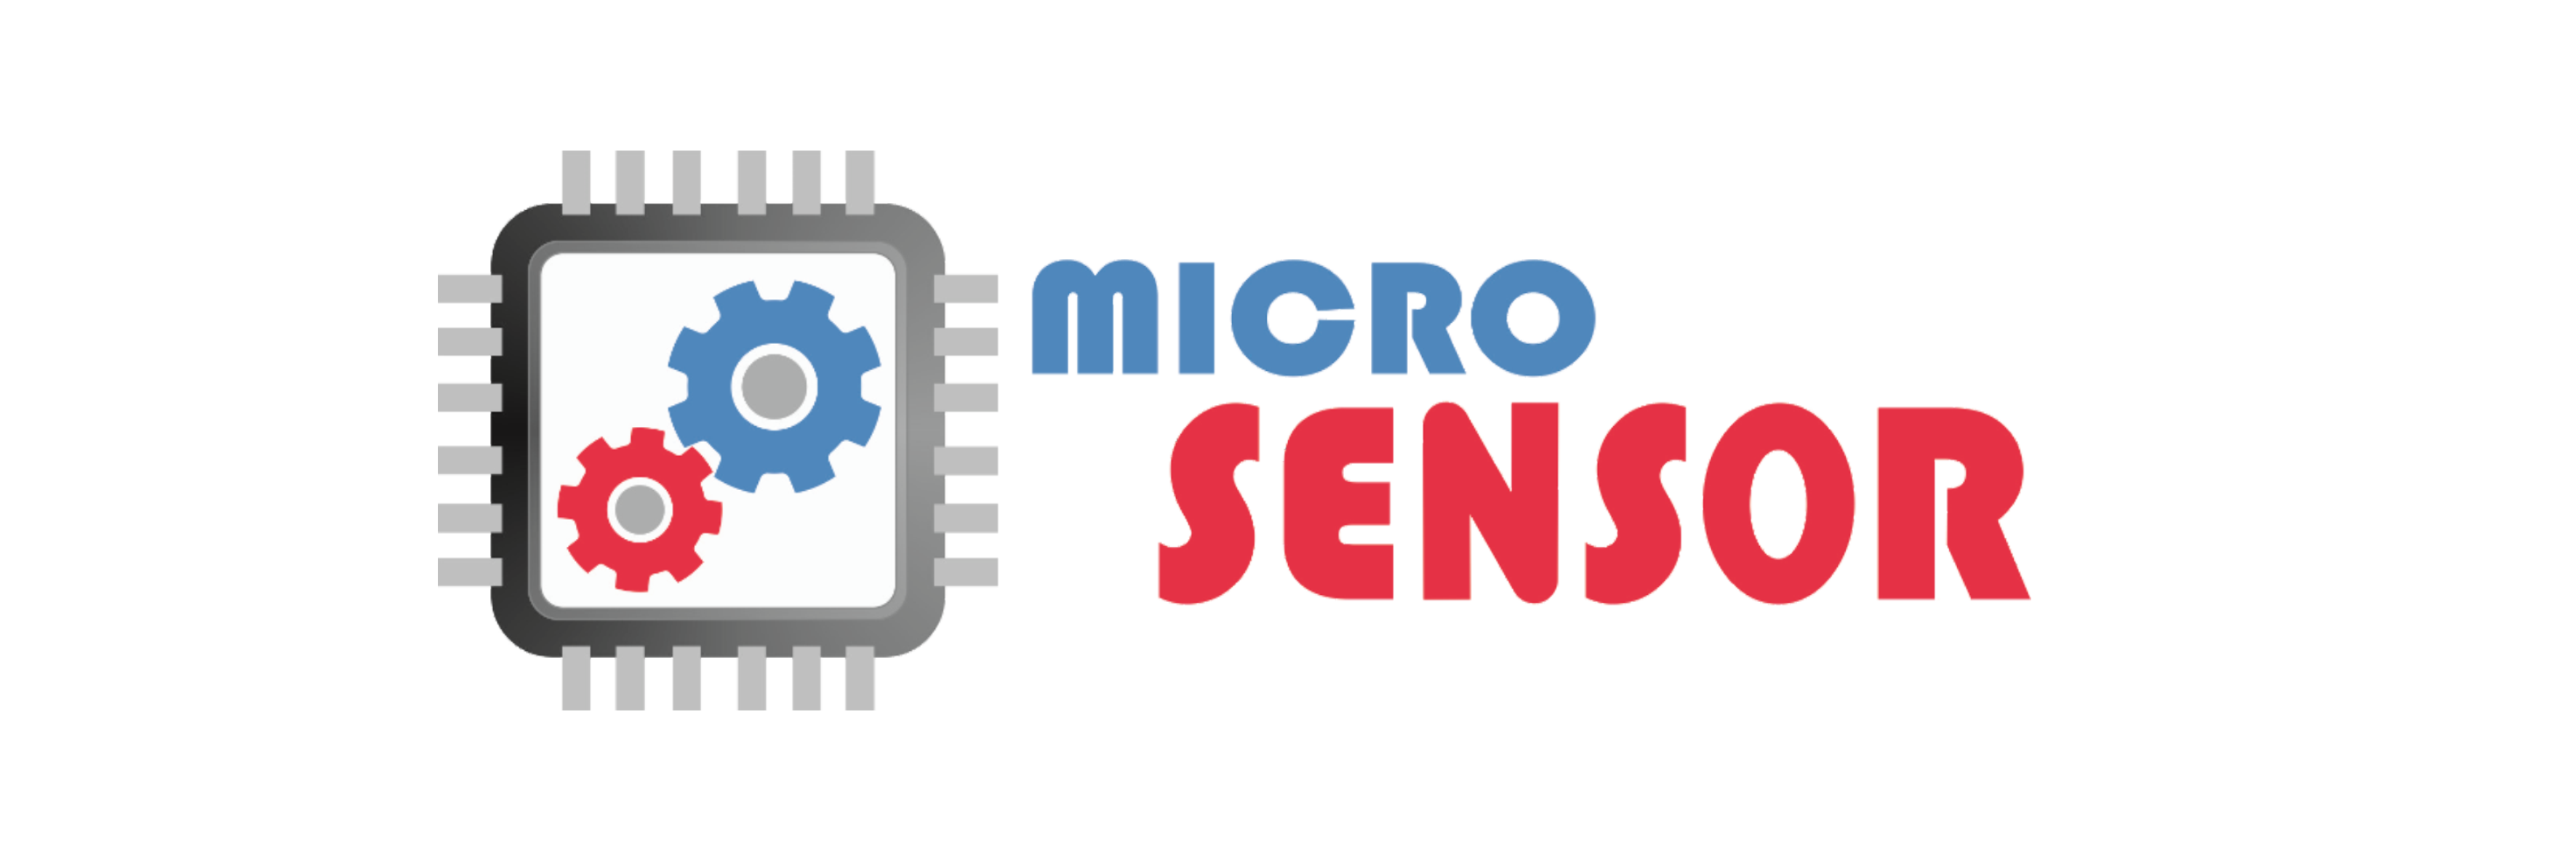 MicroSensor